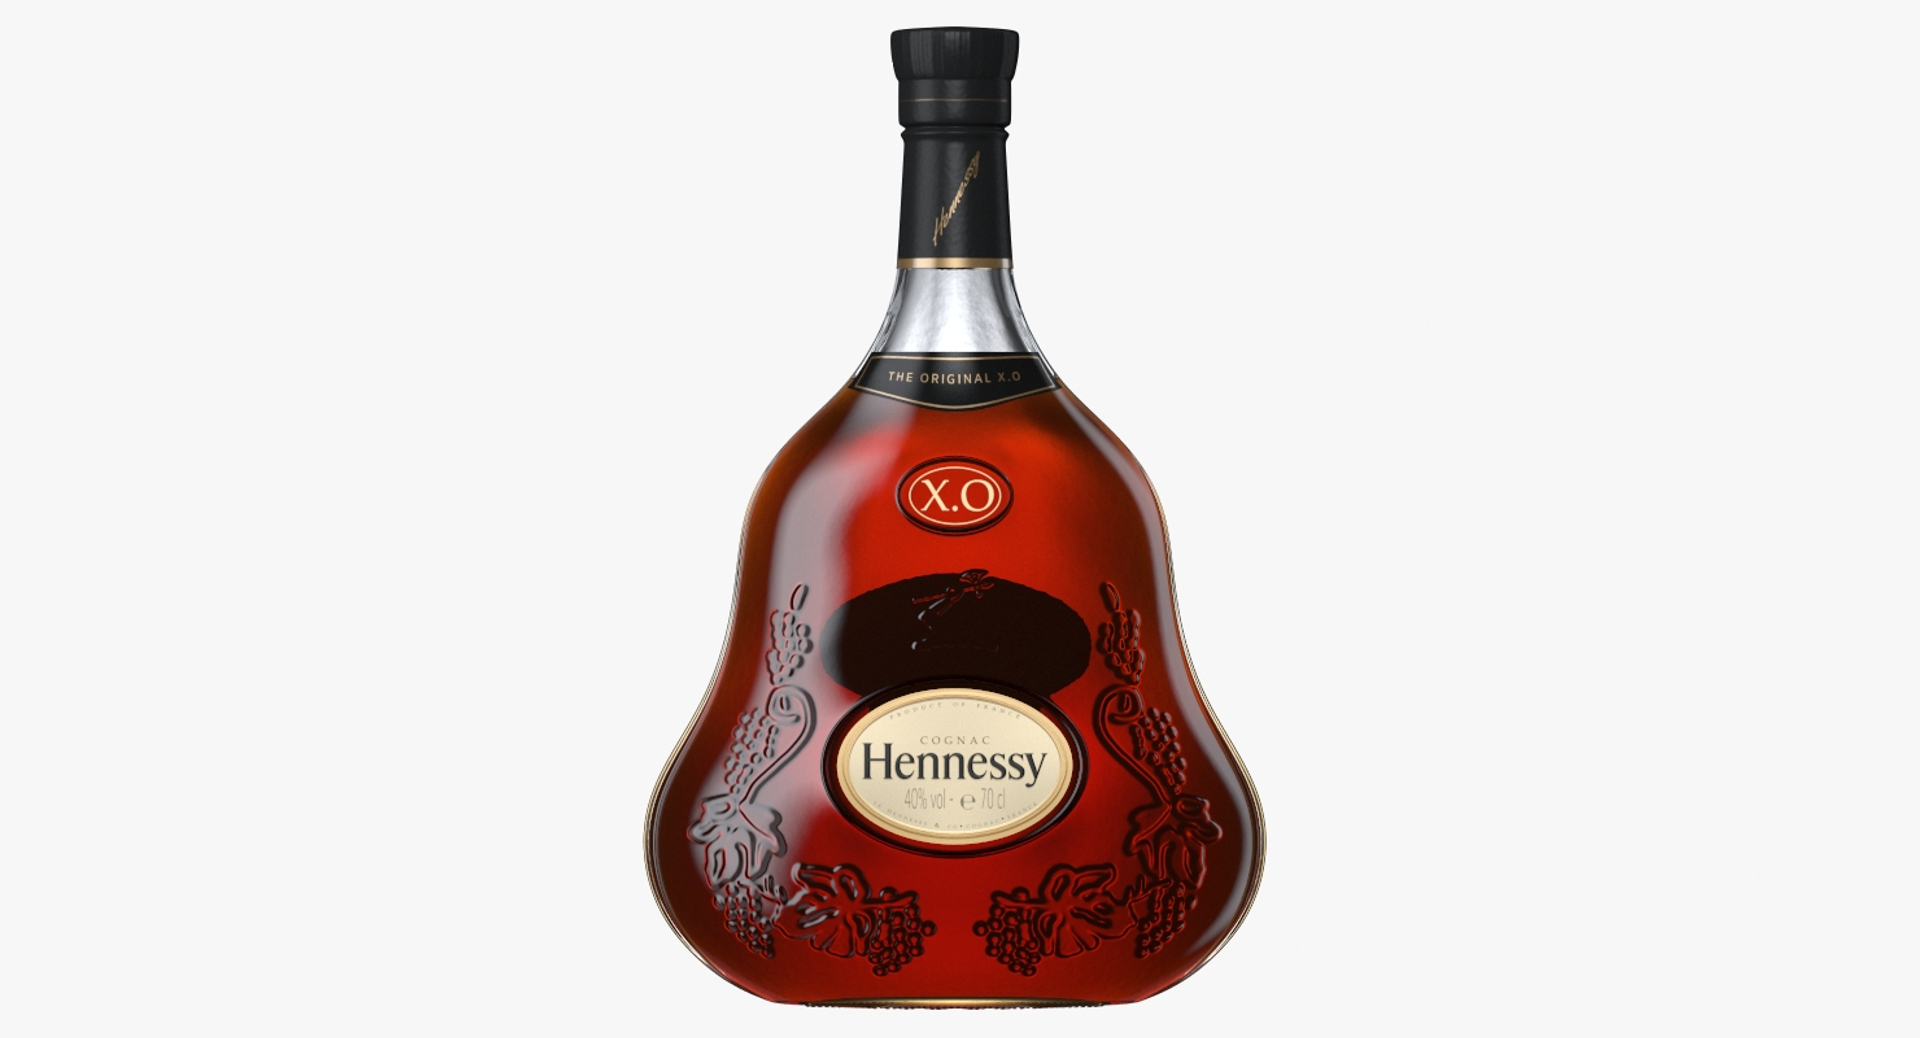 Hennessy xo cognac bottle 3D model - TurboSquid 1428660